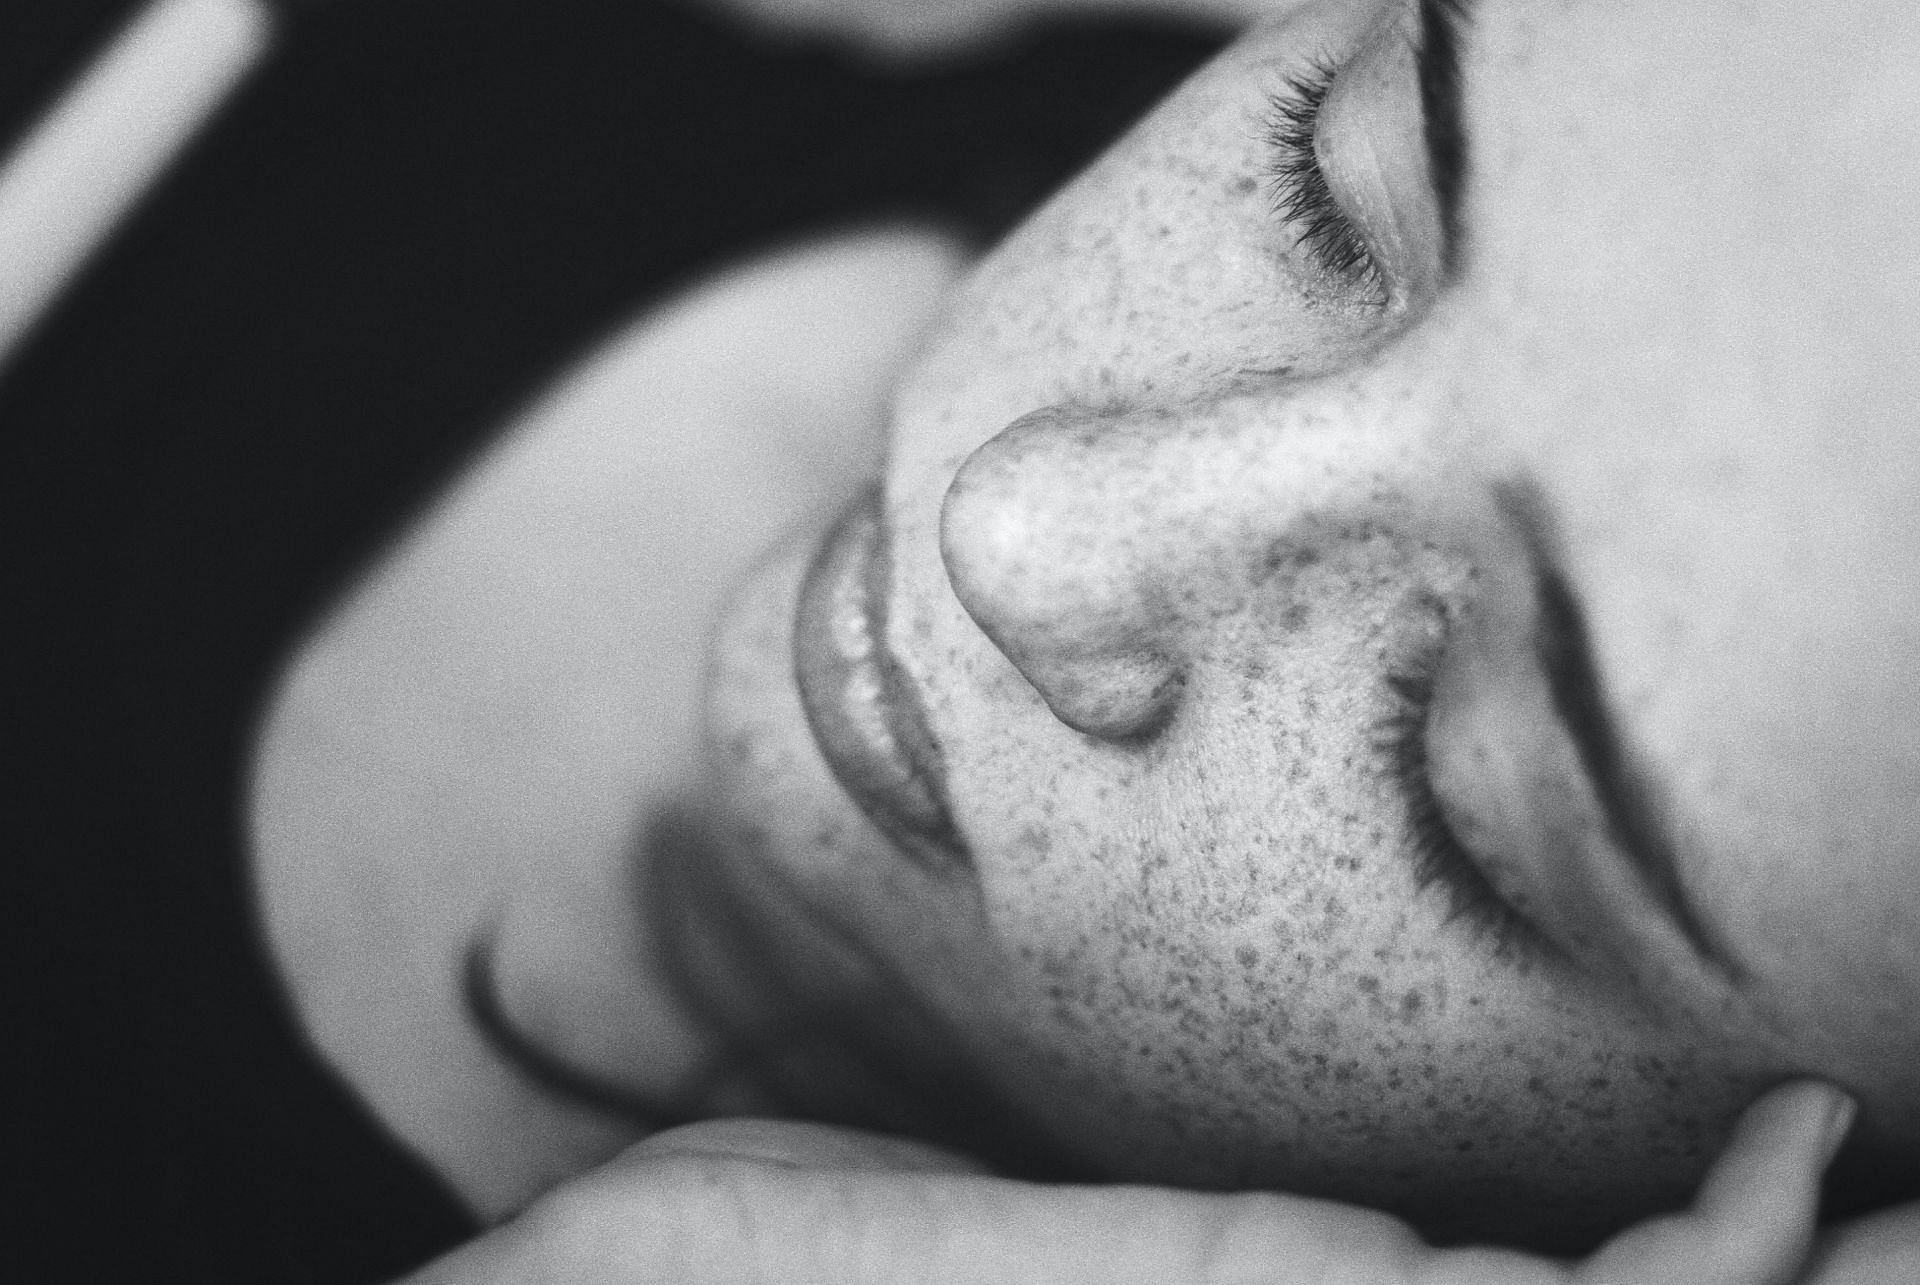 Disturbances in sleep can affect mental health. (Image via Unsplash/Rodrigo Pereira)